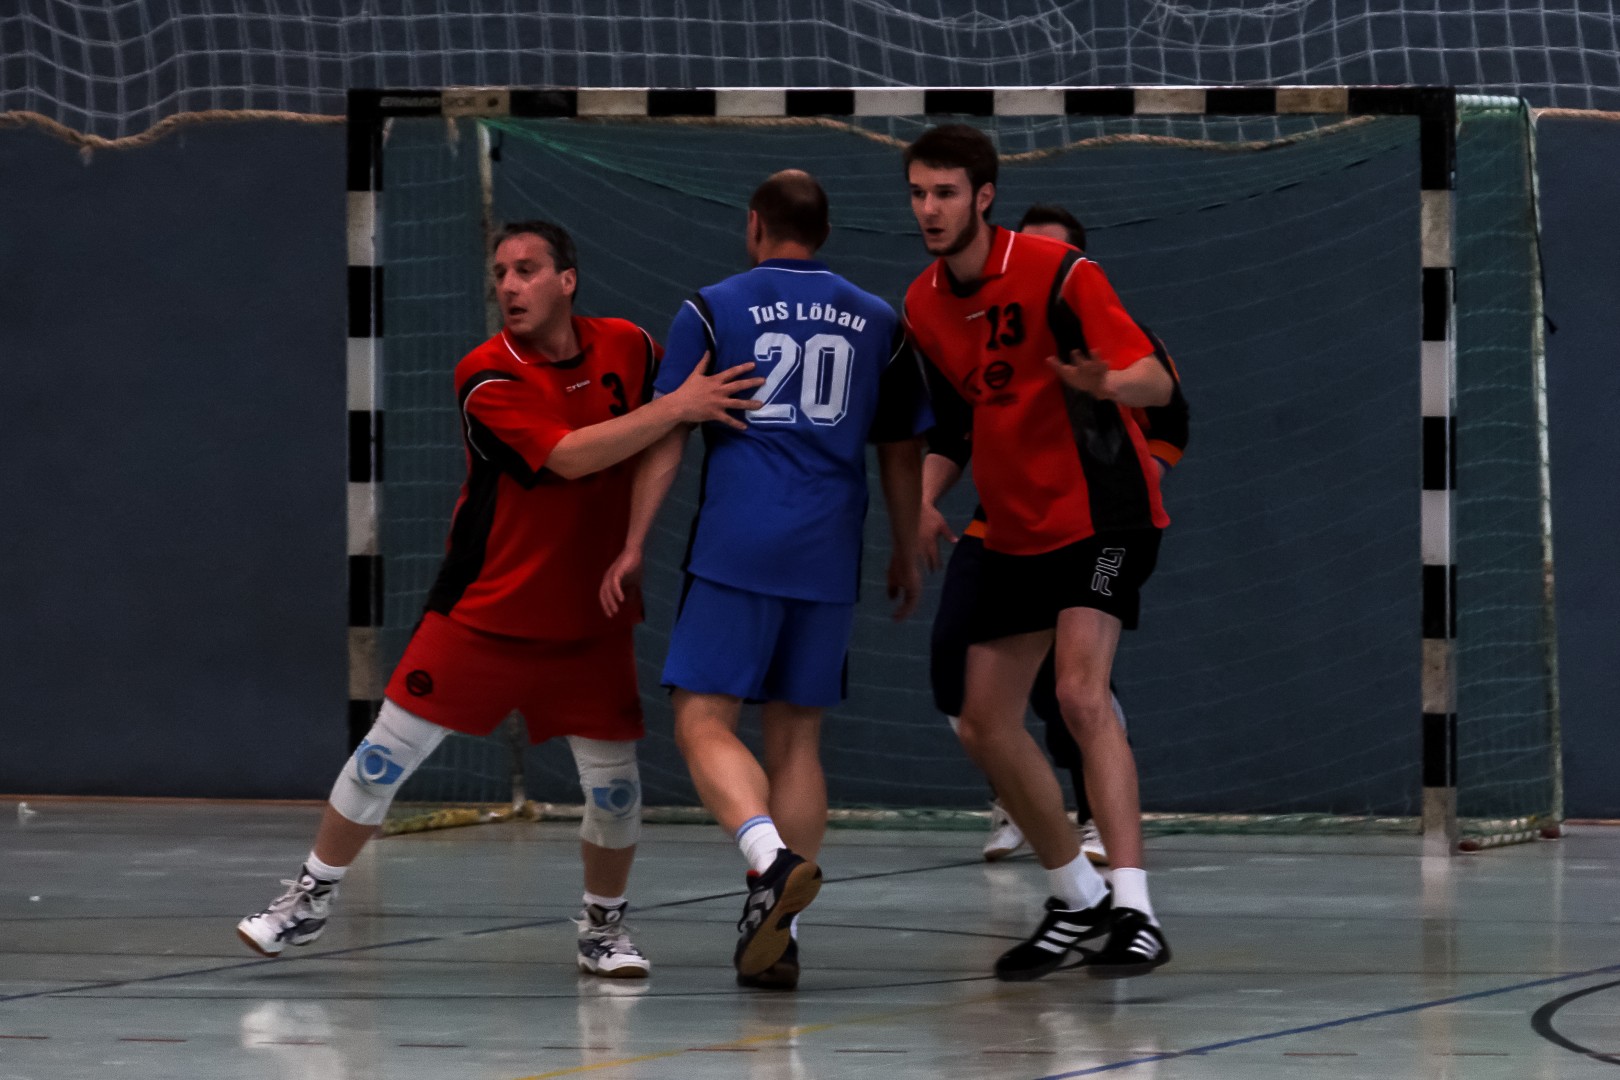 Handball Highlight Loebau